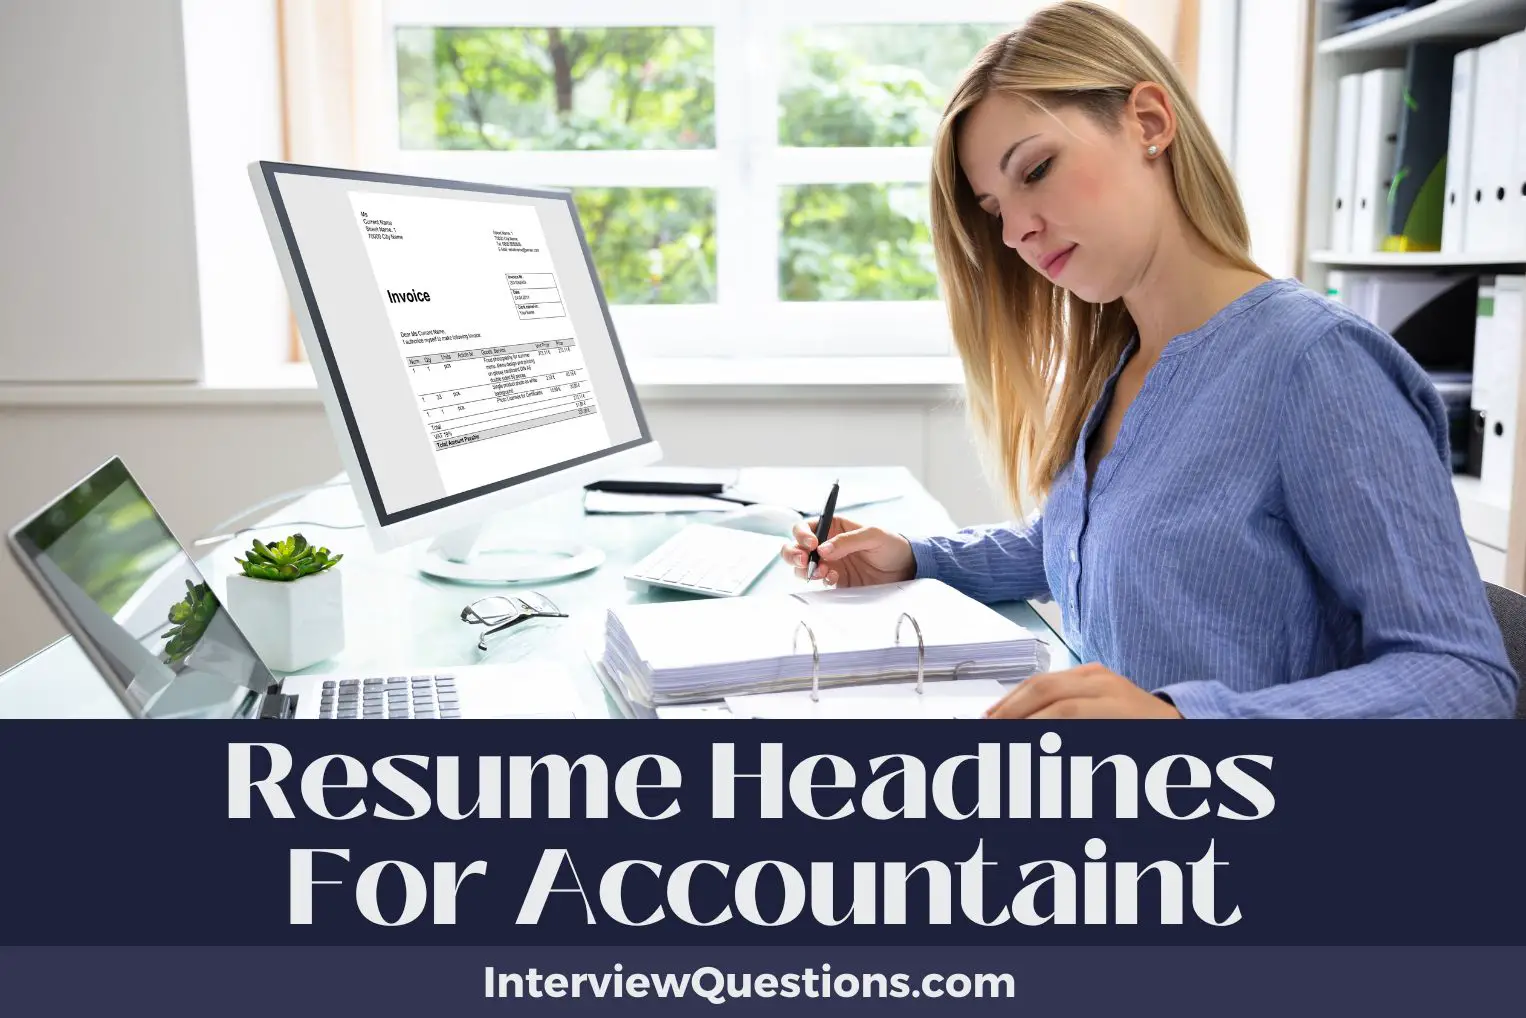 Resume Headlines For Accountants